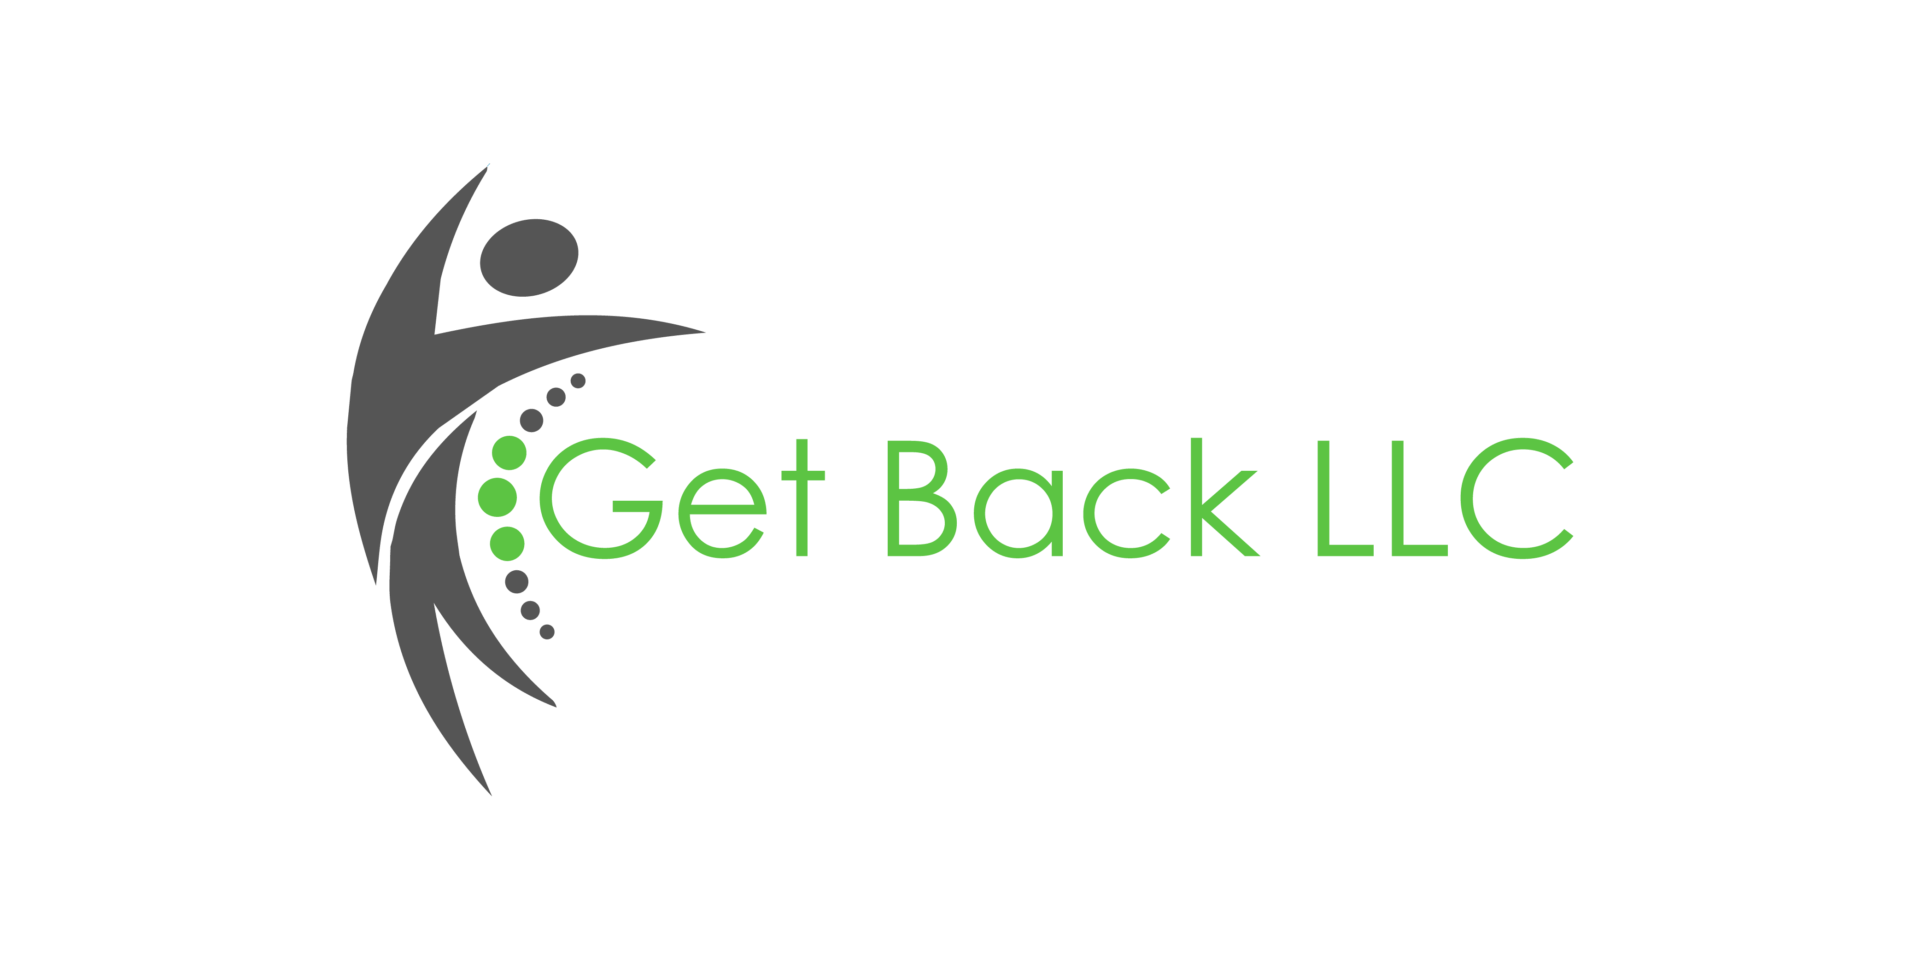 Get Back LLC